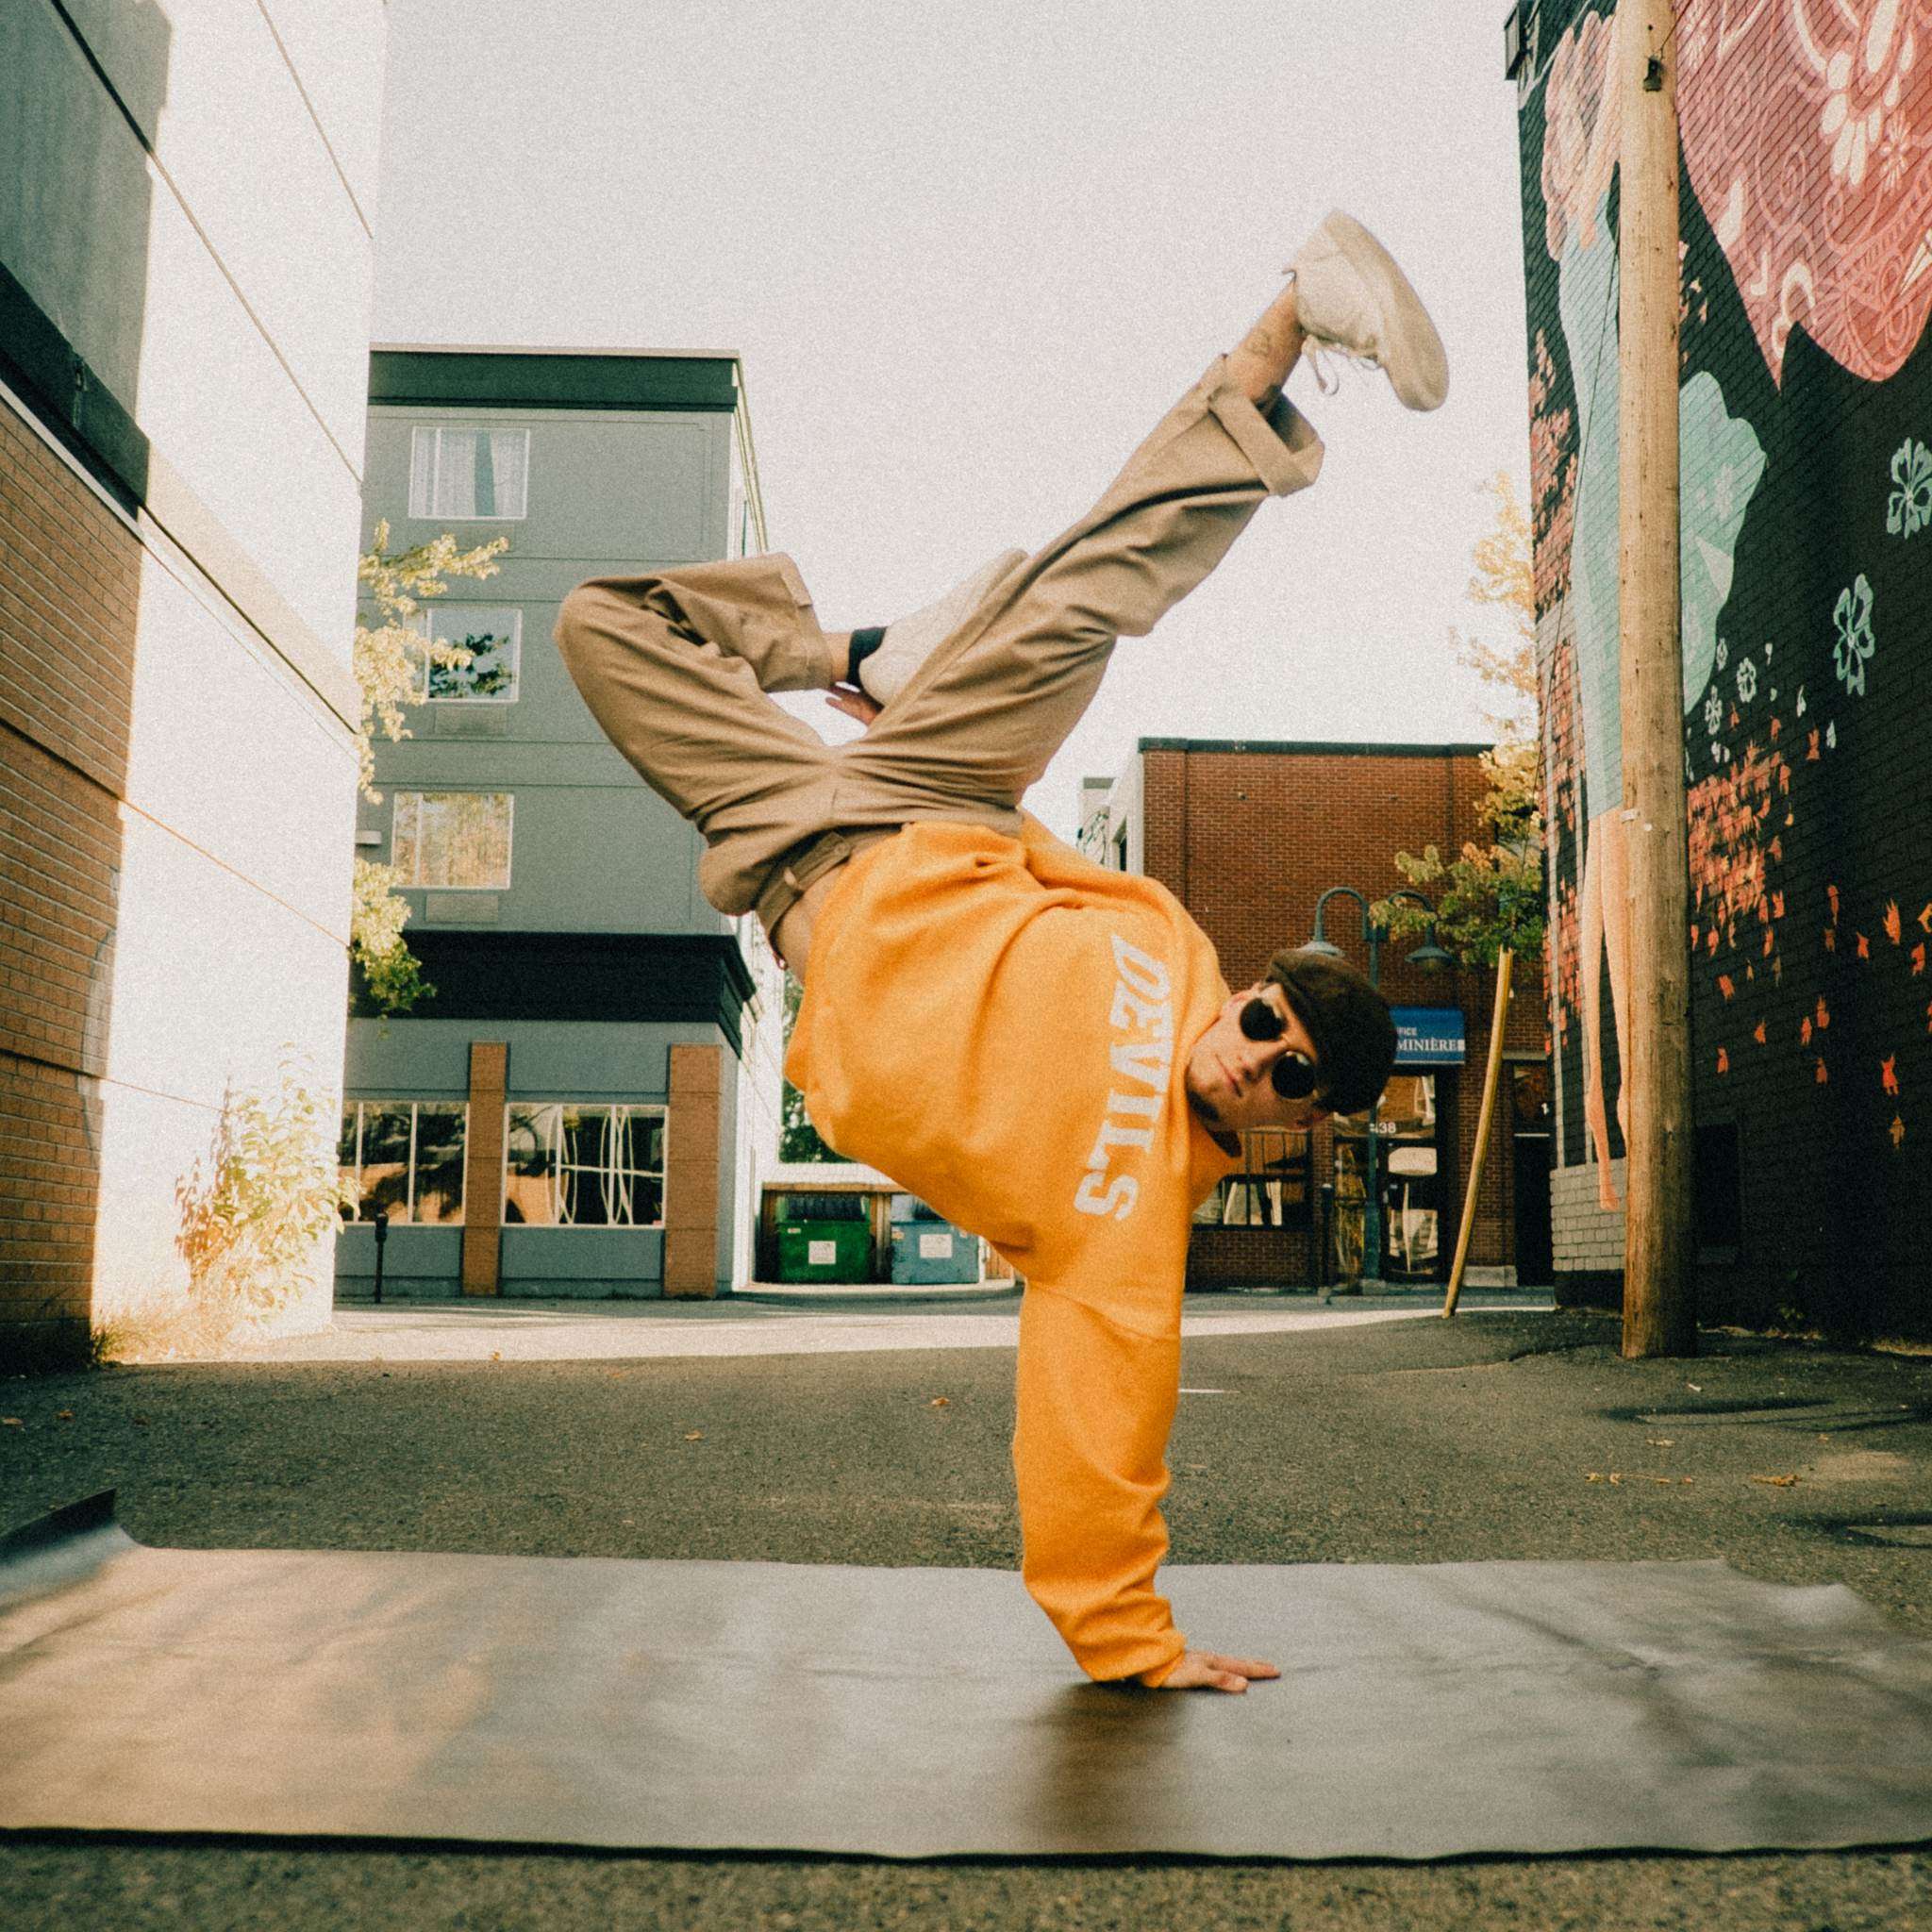 Olivier Lachapelle, dans une ruelle de noranda, pose en position de breakdance. 